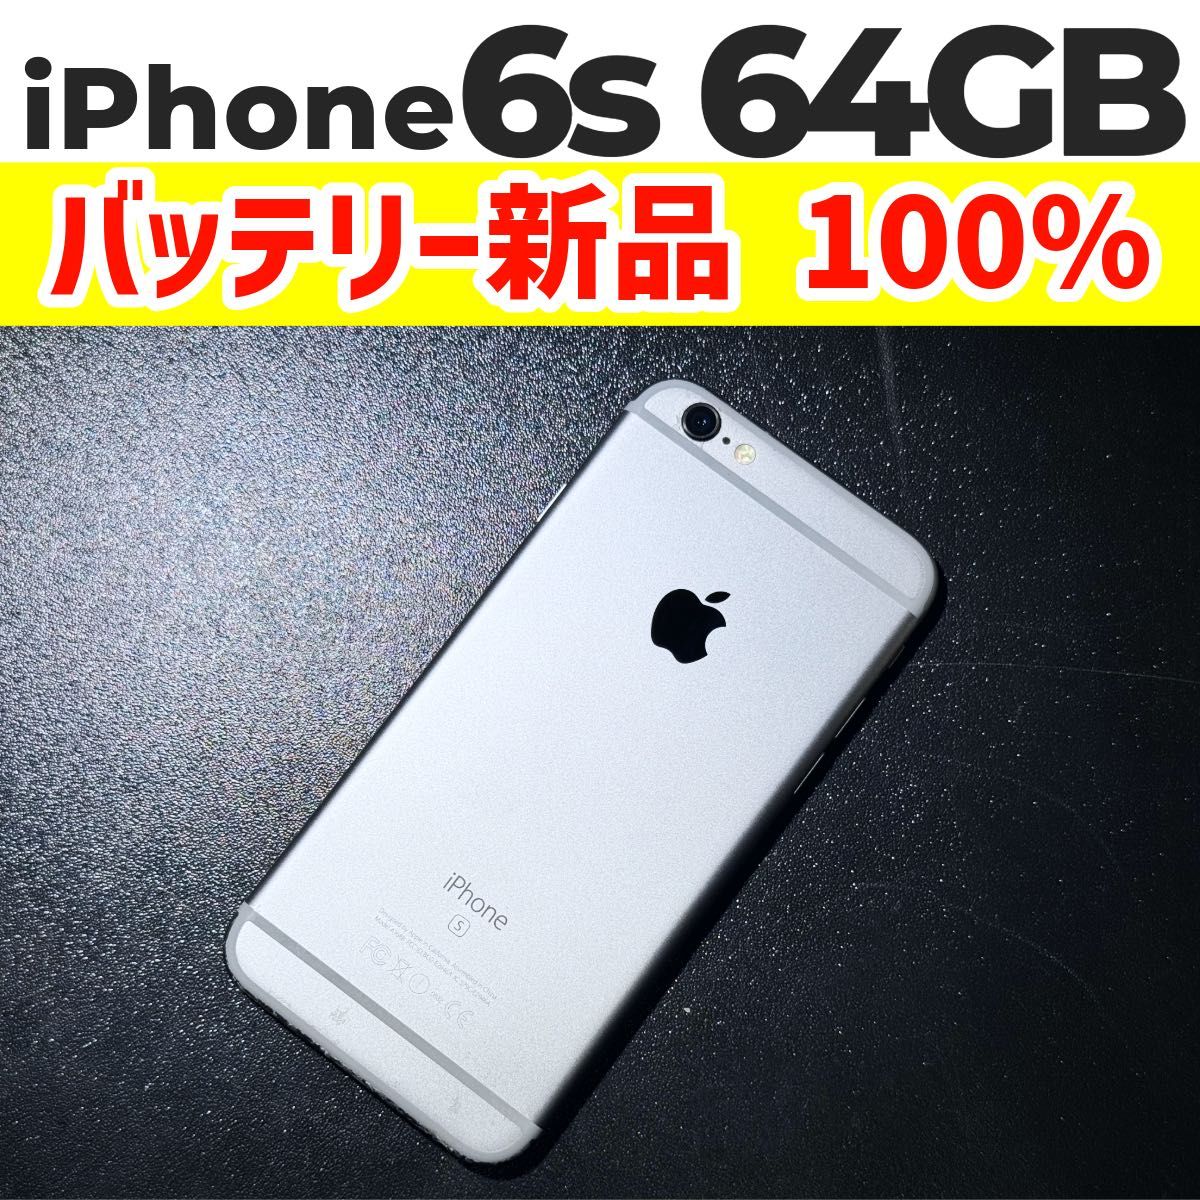 iPhone 6s SpaceGray 64GB スペースグレイ SIMフリー